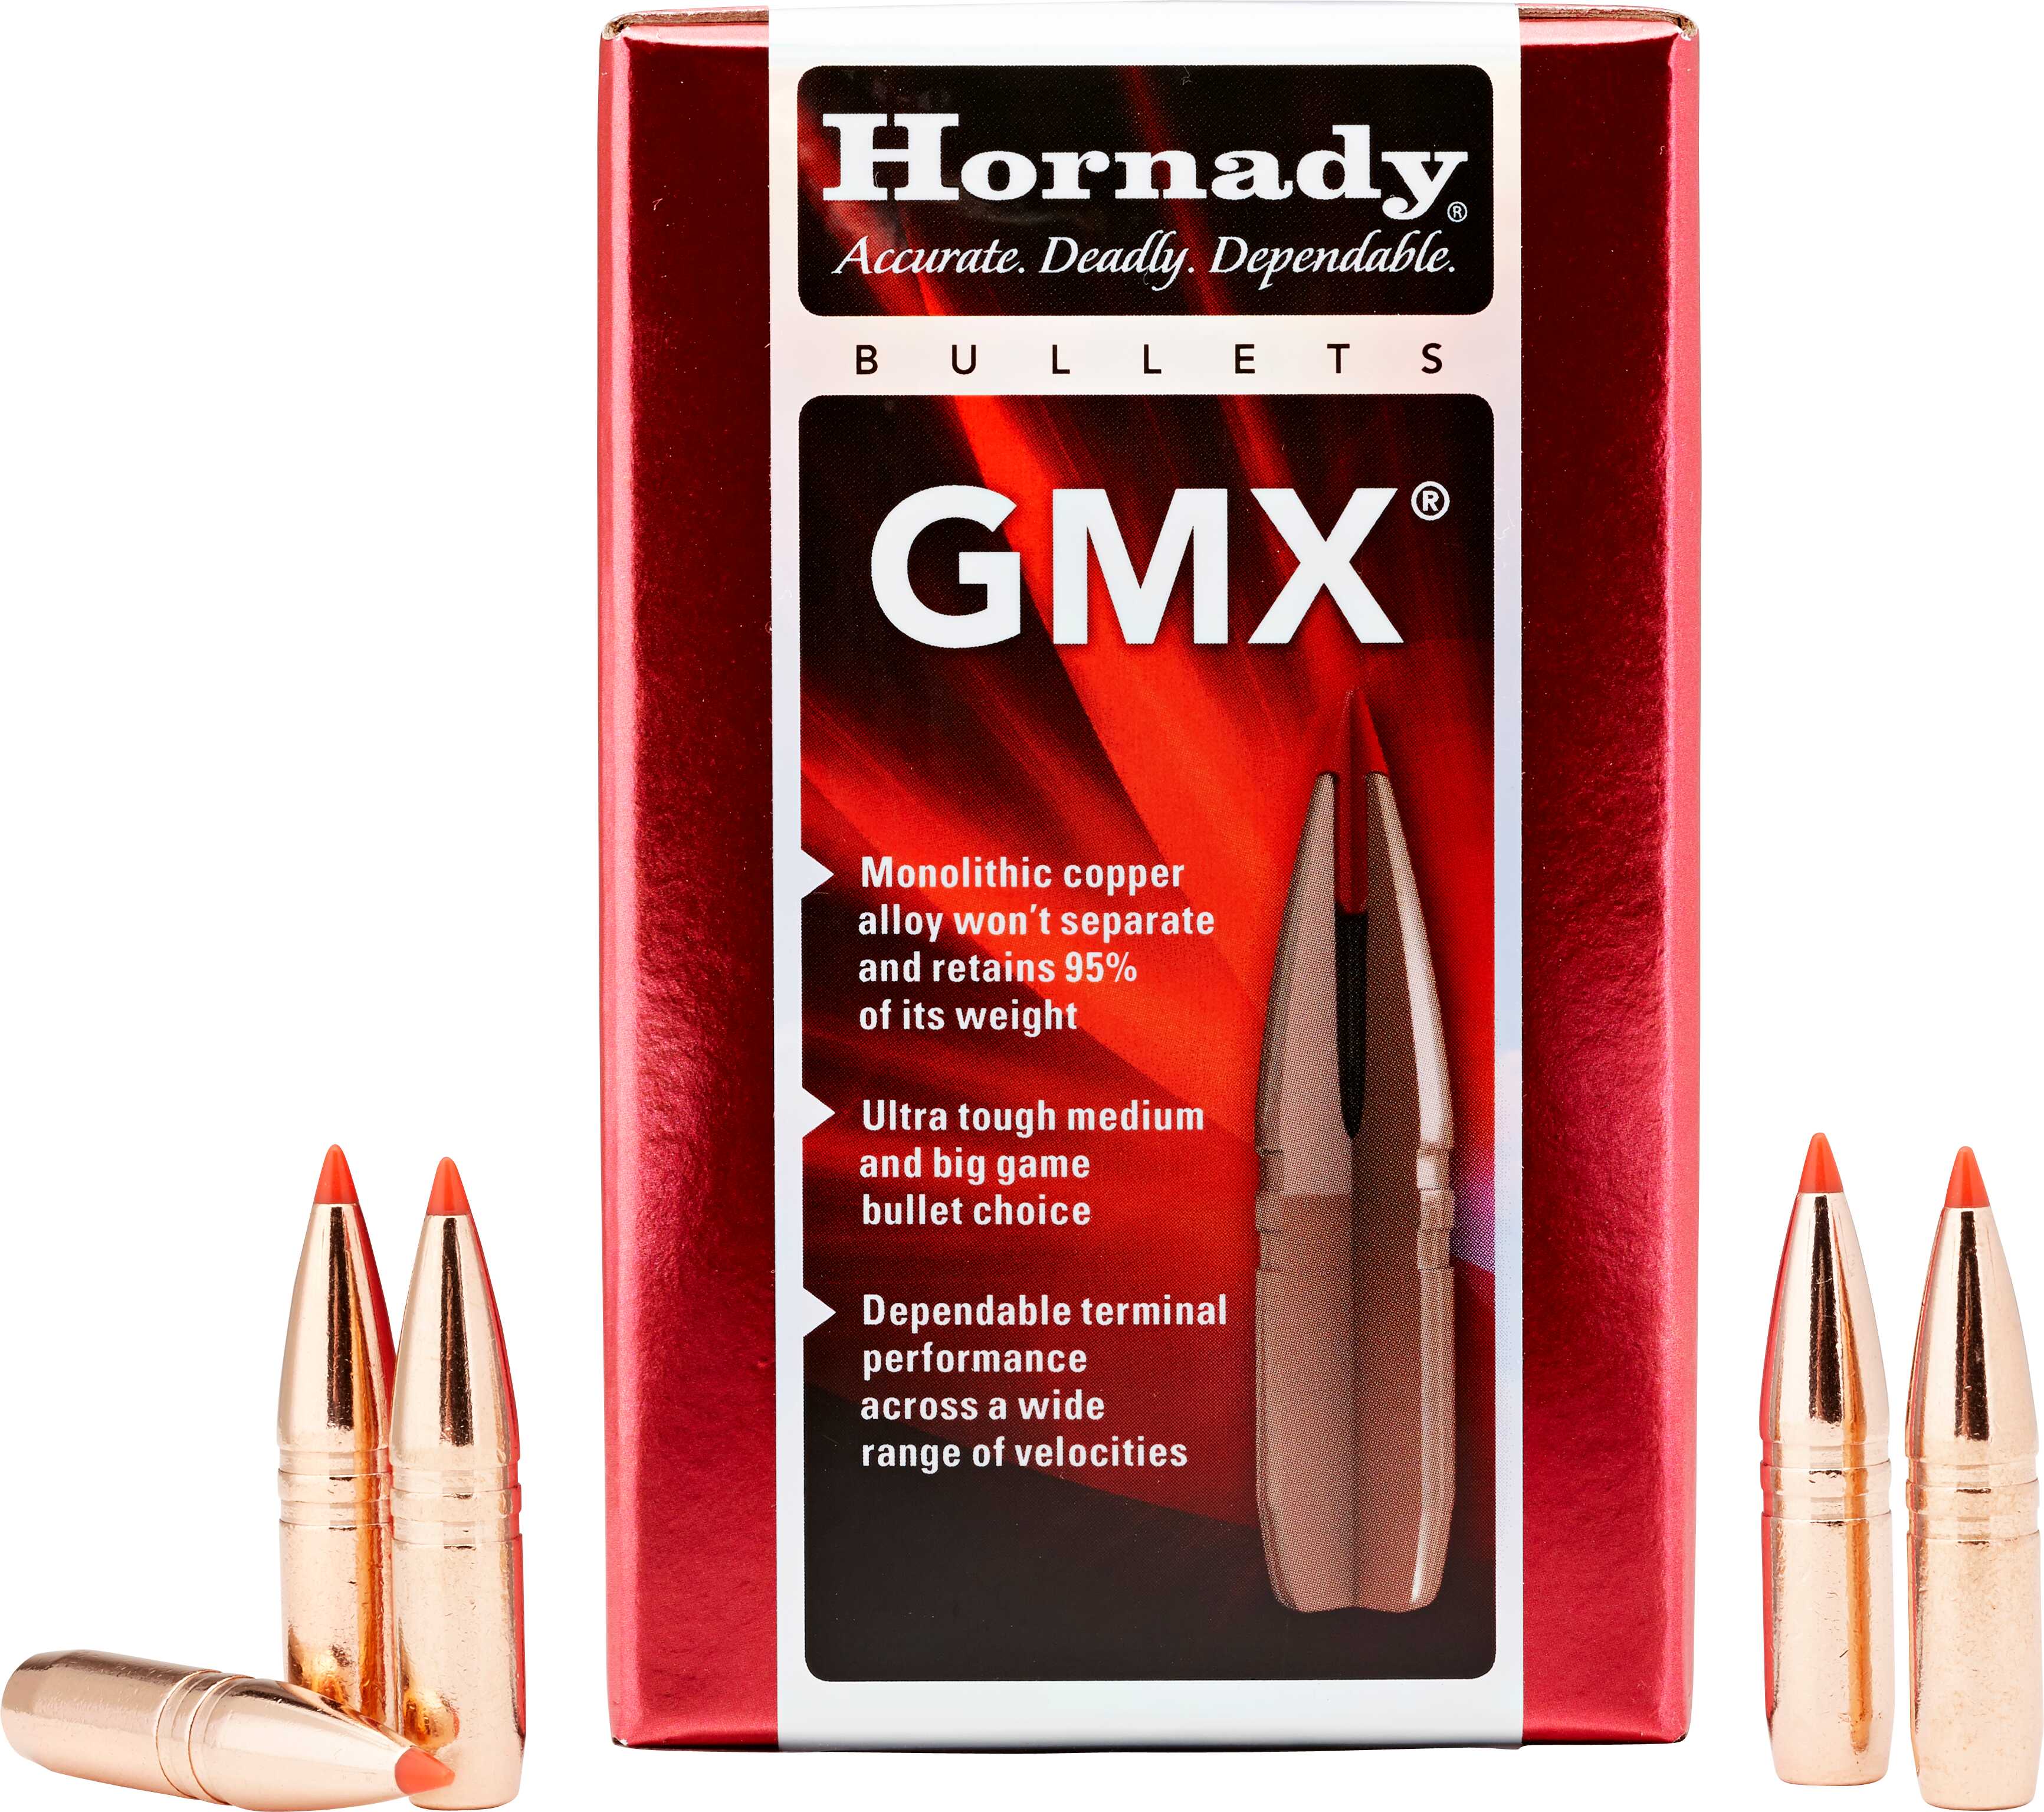 Hornady Bullet 22 Caliber .224 GMX 55 Grain Per 50